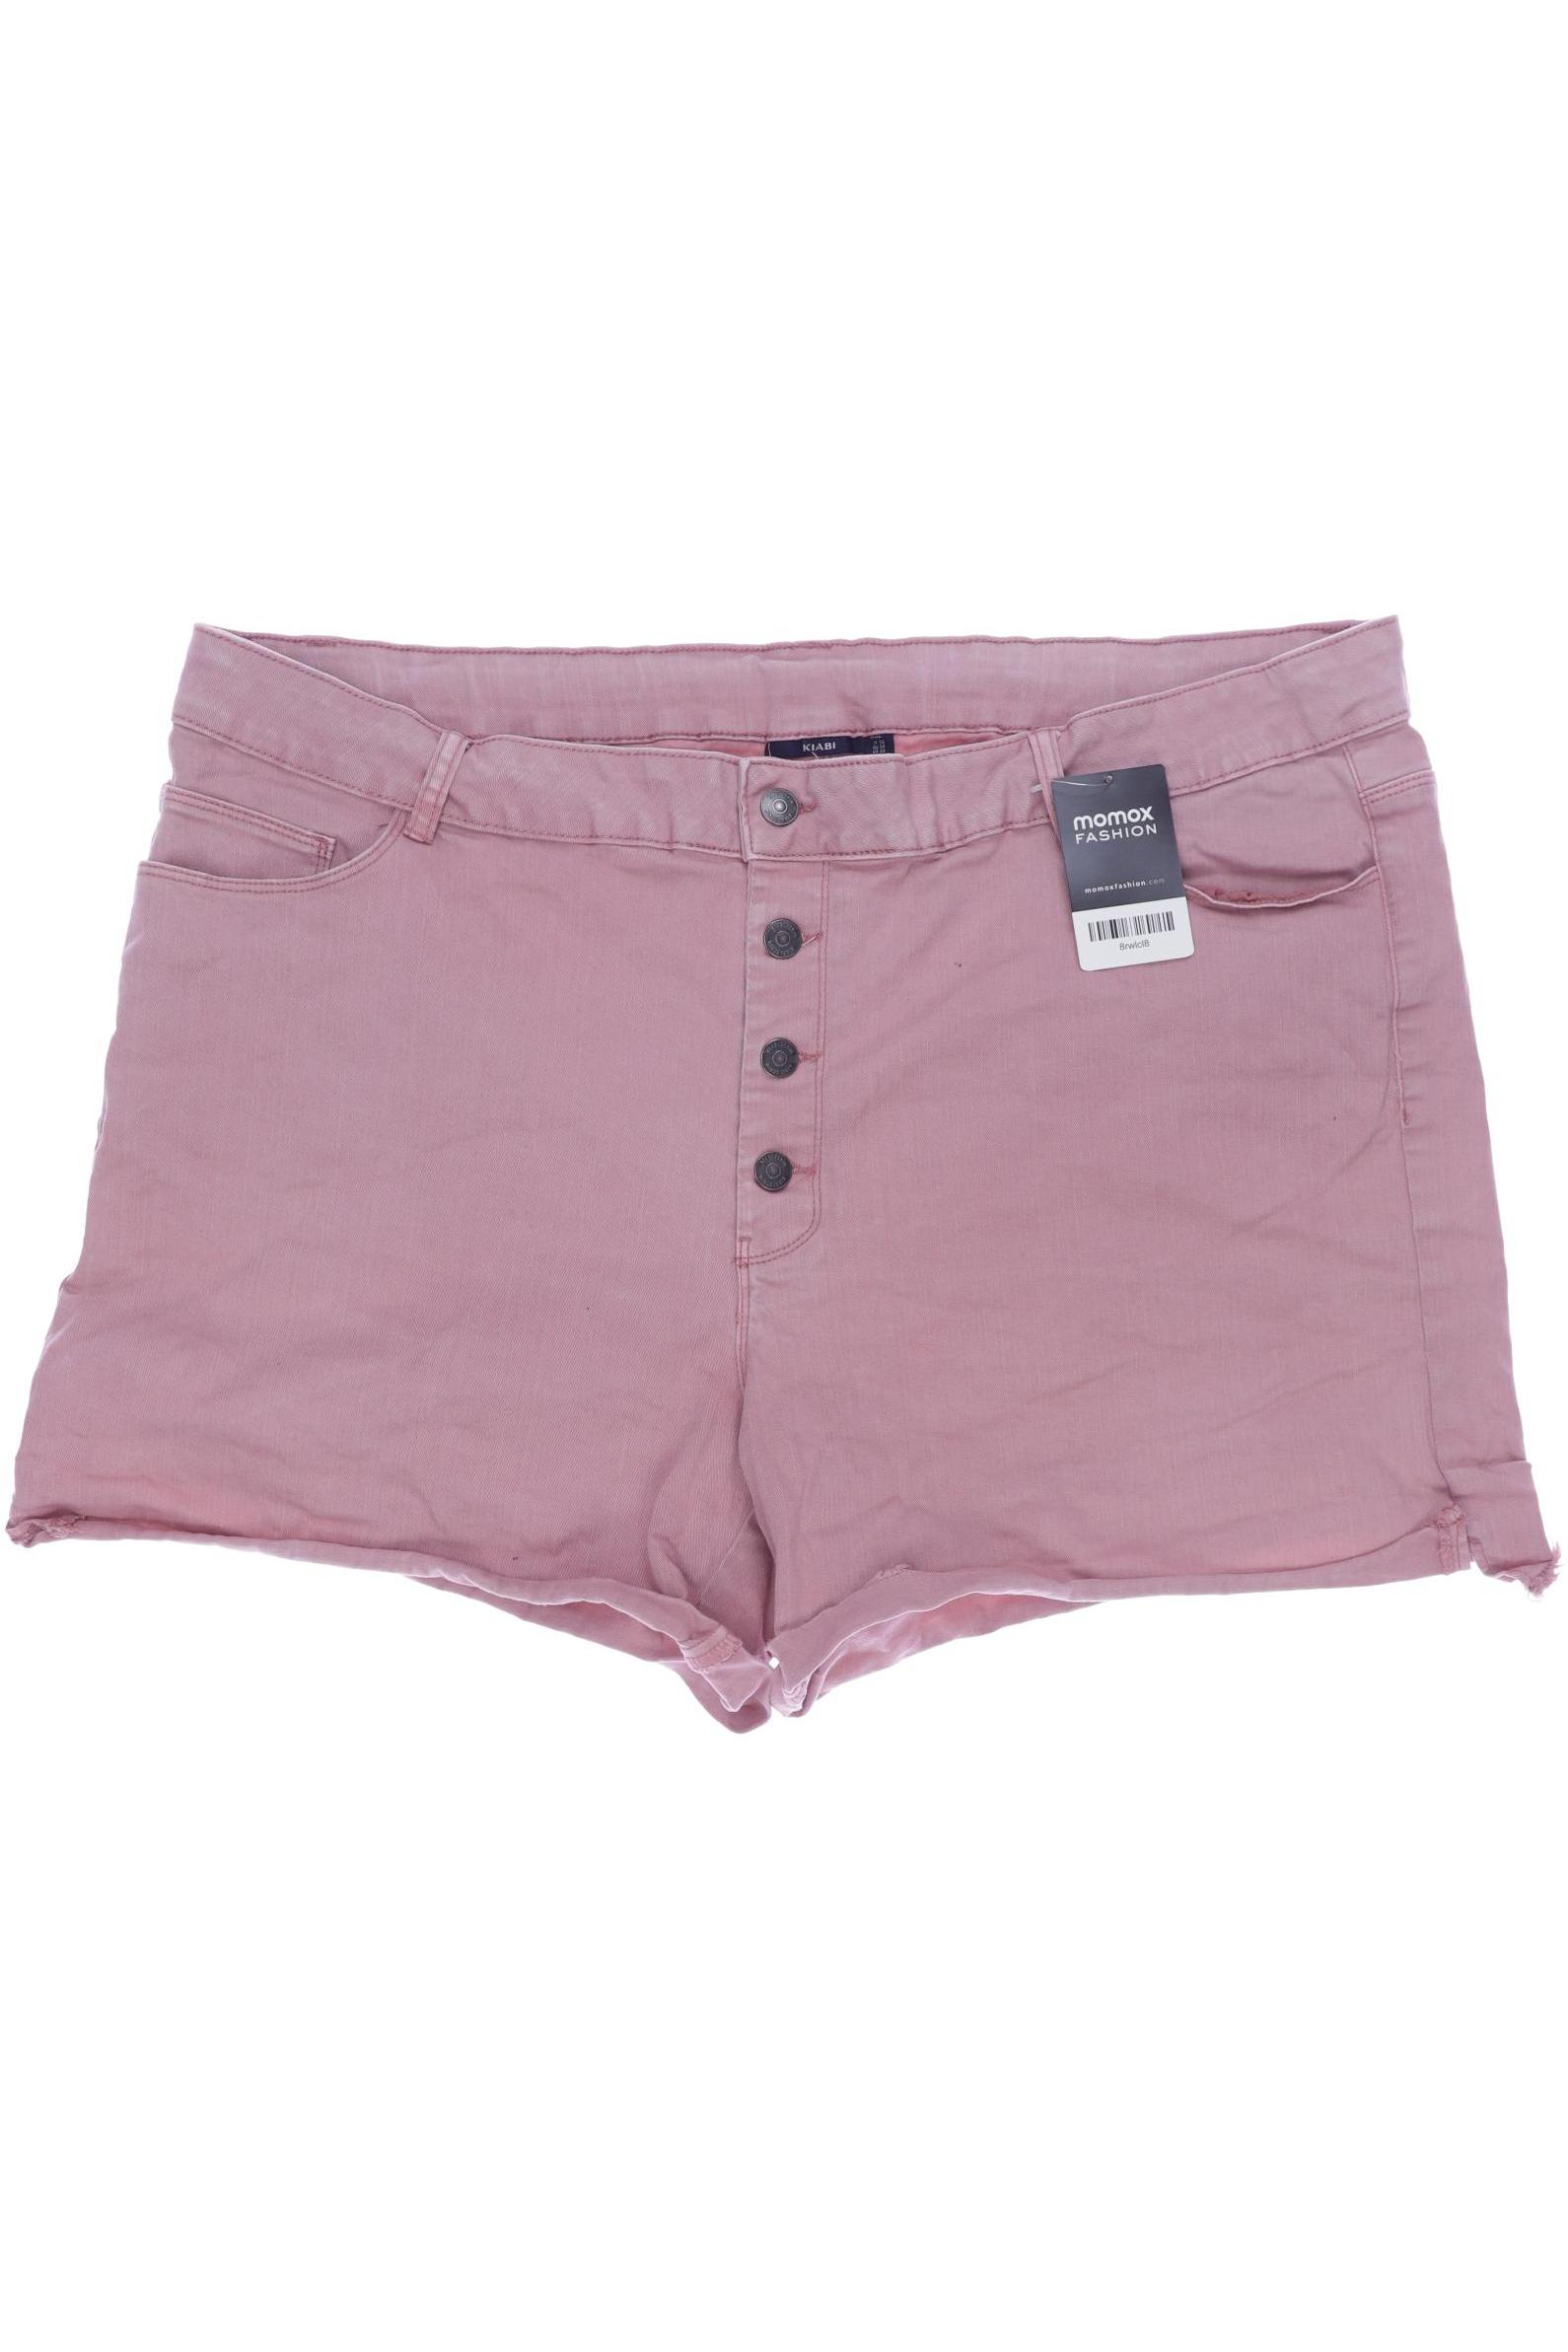 Kiabi Damen Shorts, pink von Kiabi